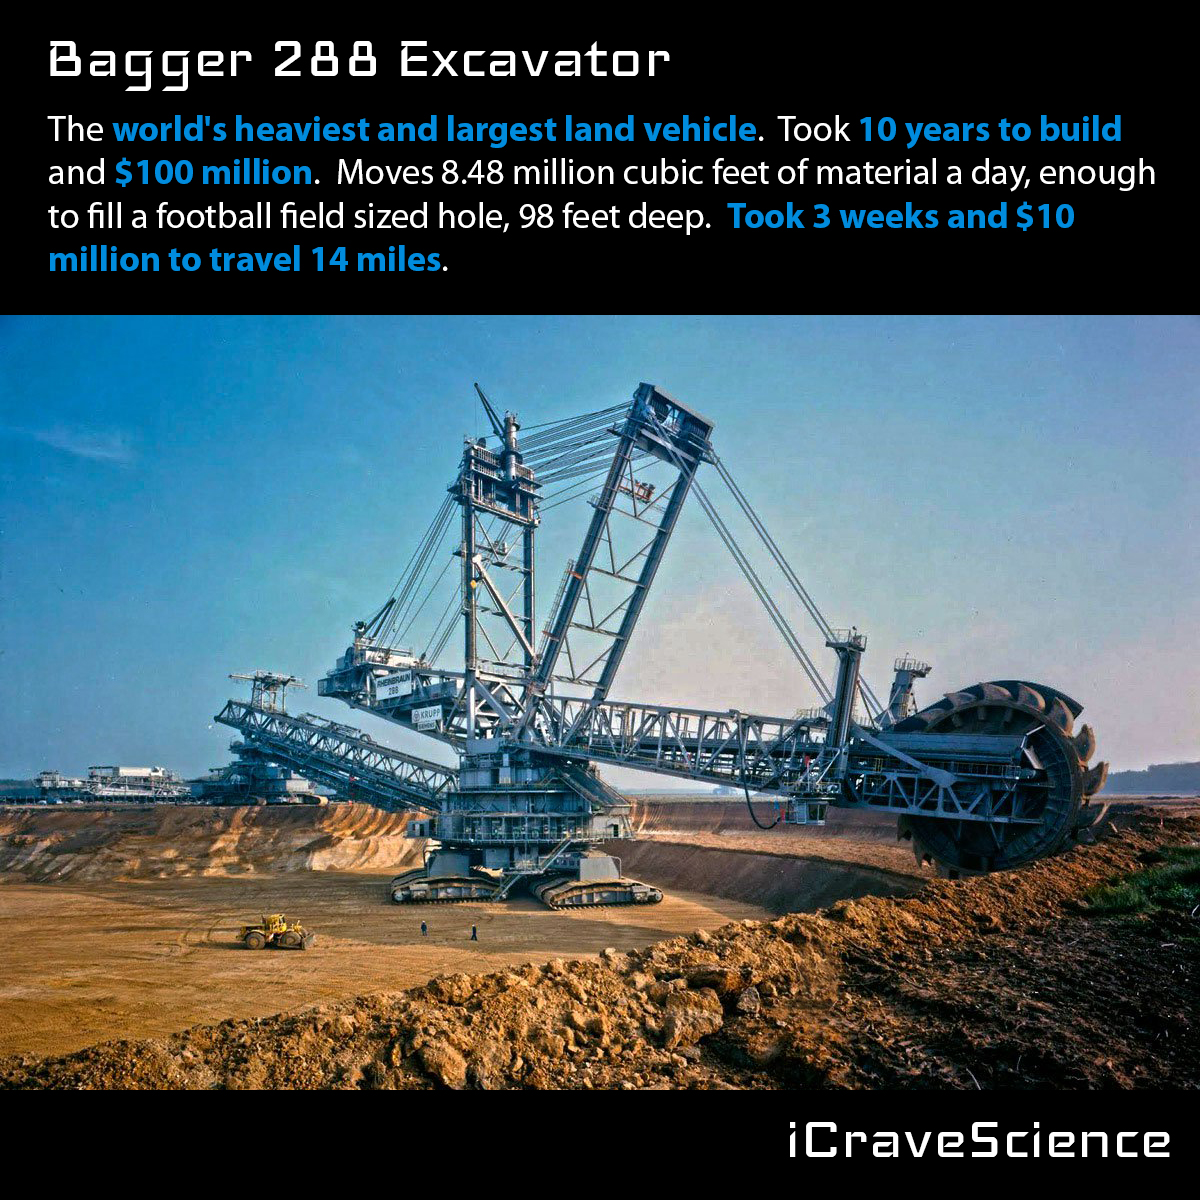 Bagger 288 #19